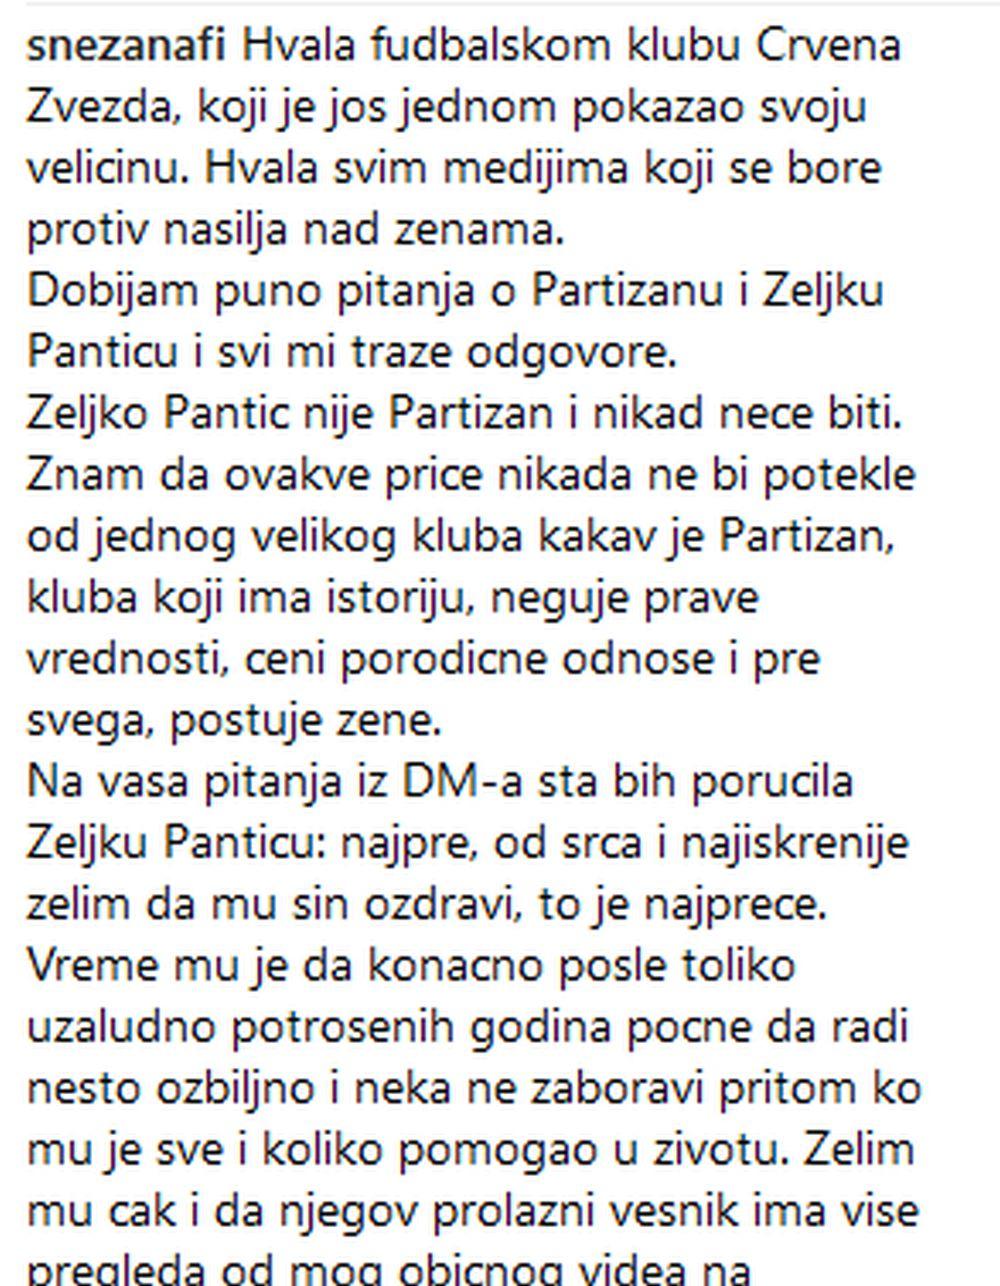 Javno pismo Snežane Borjan Željku Pantiću i Partizanu